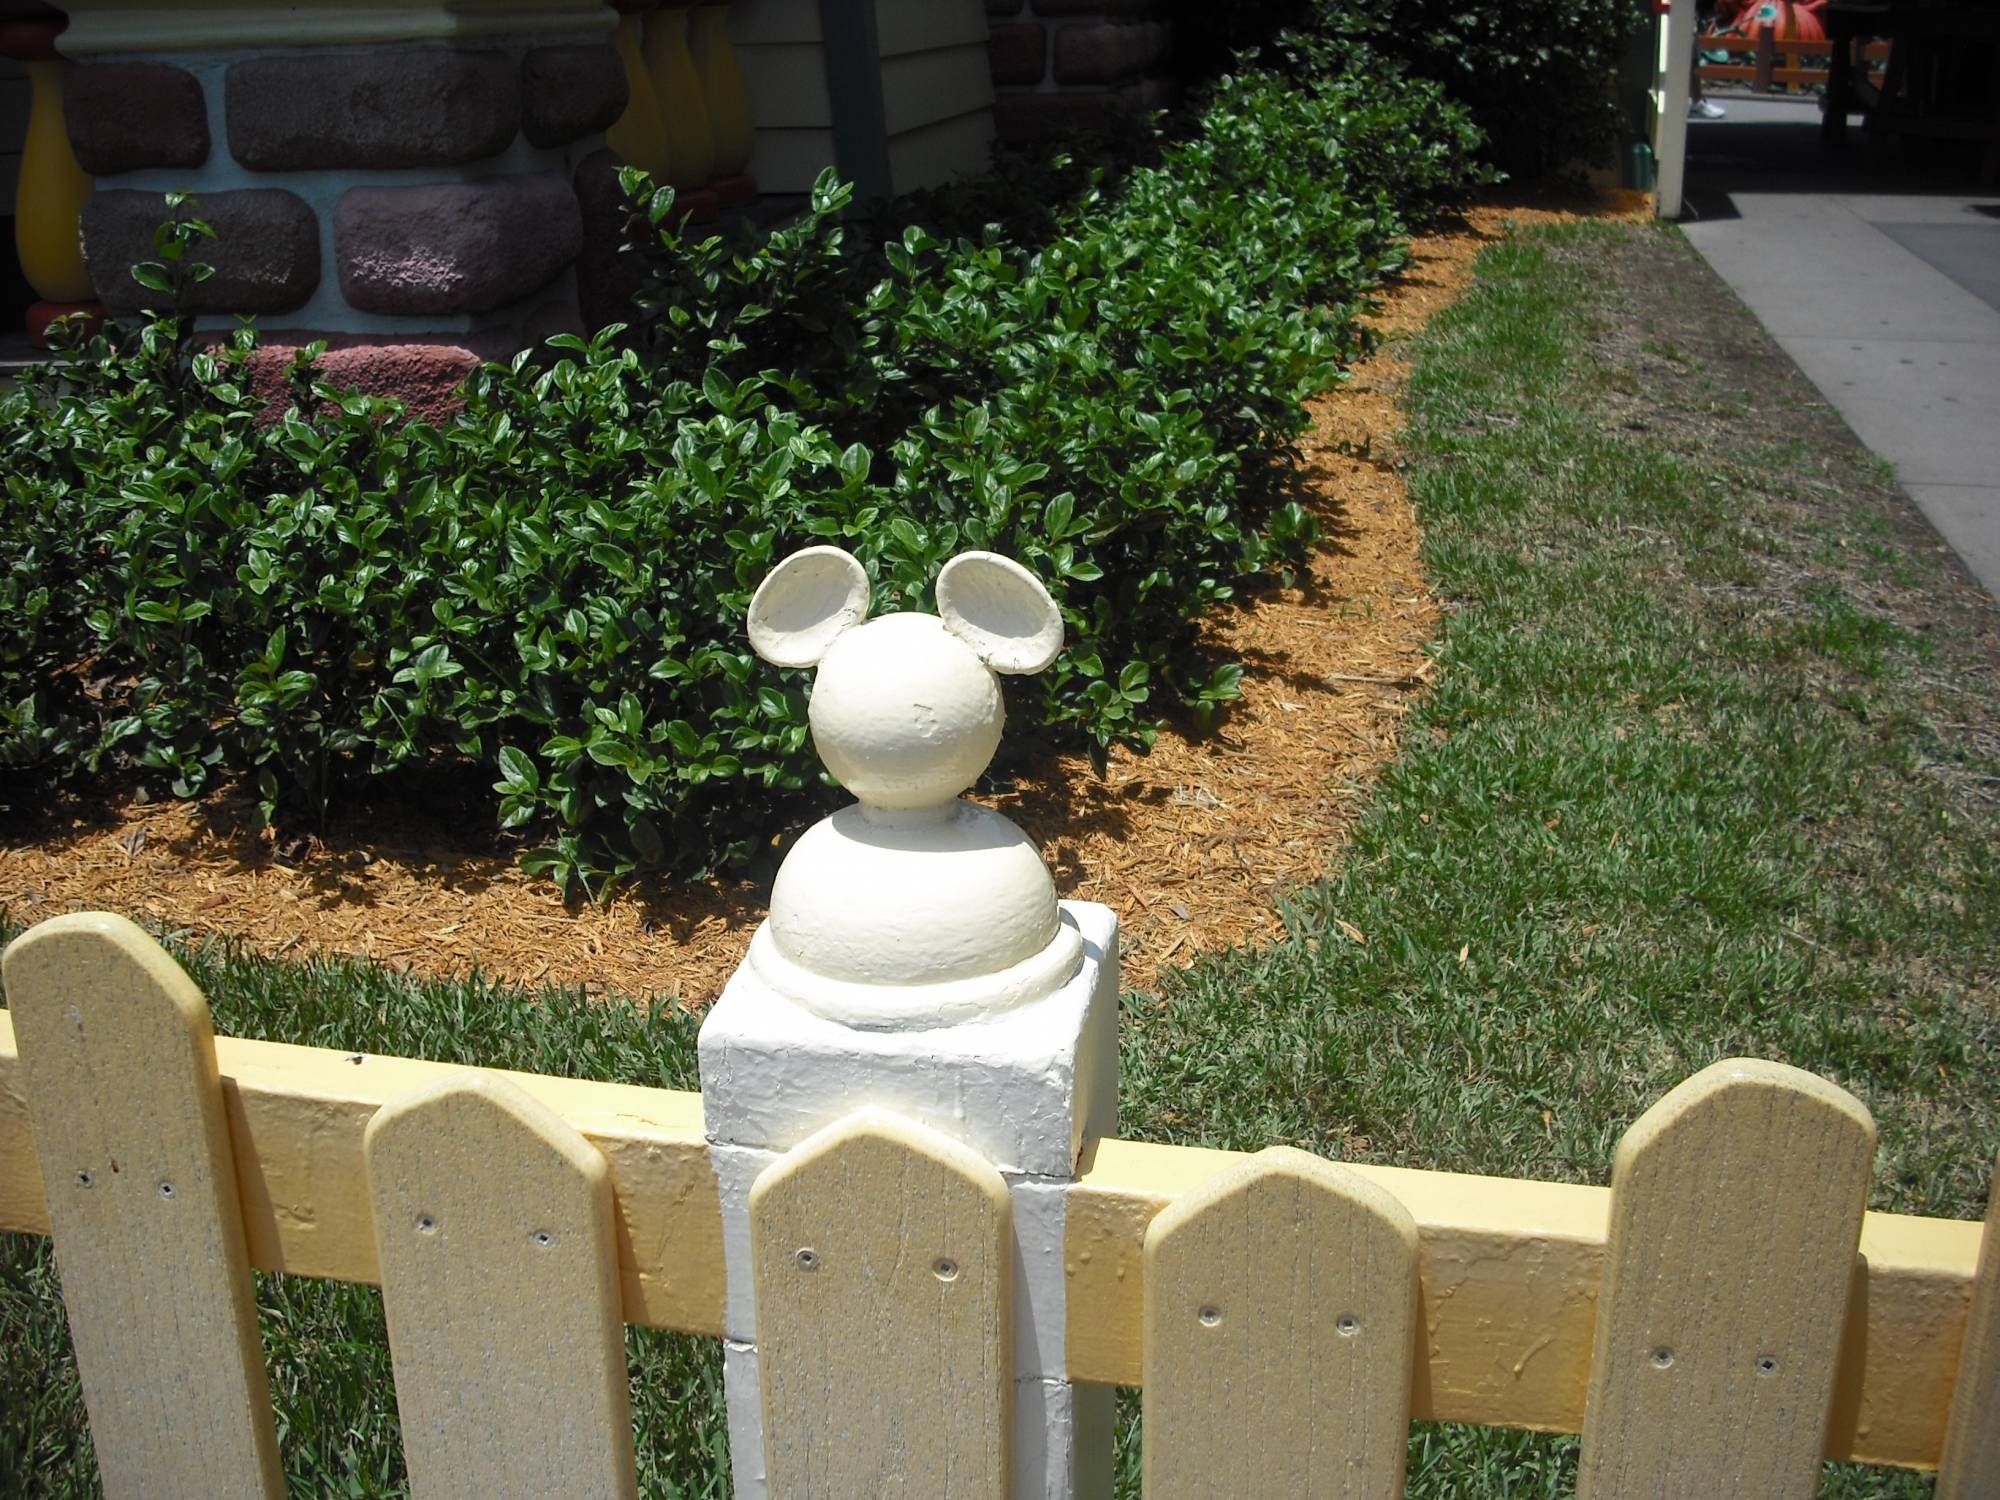 Magic Kingdom - Mickey's fence!